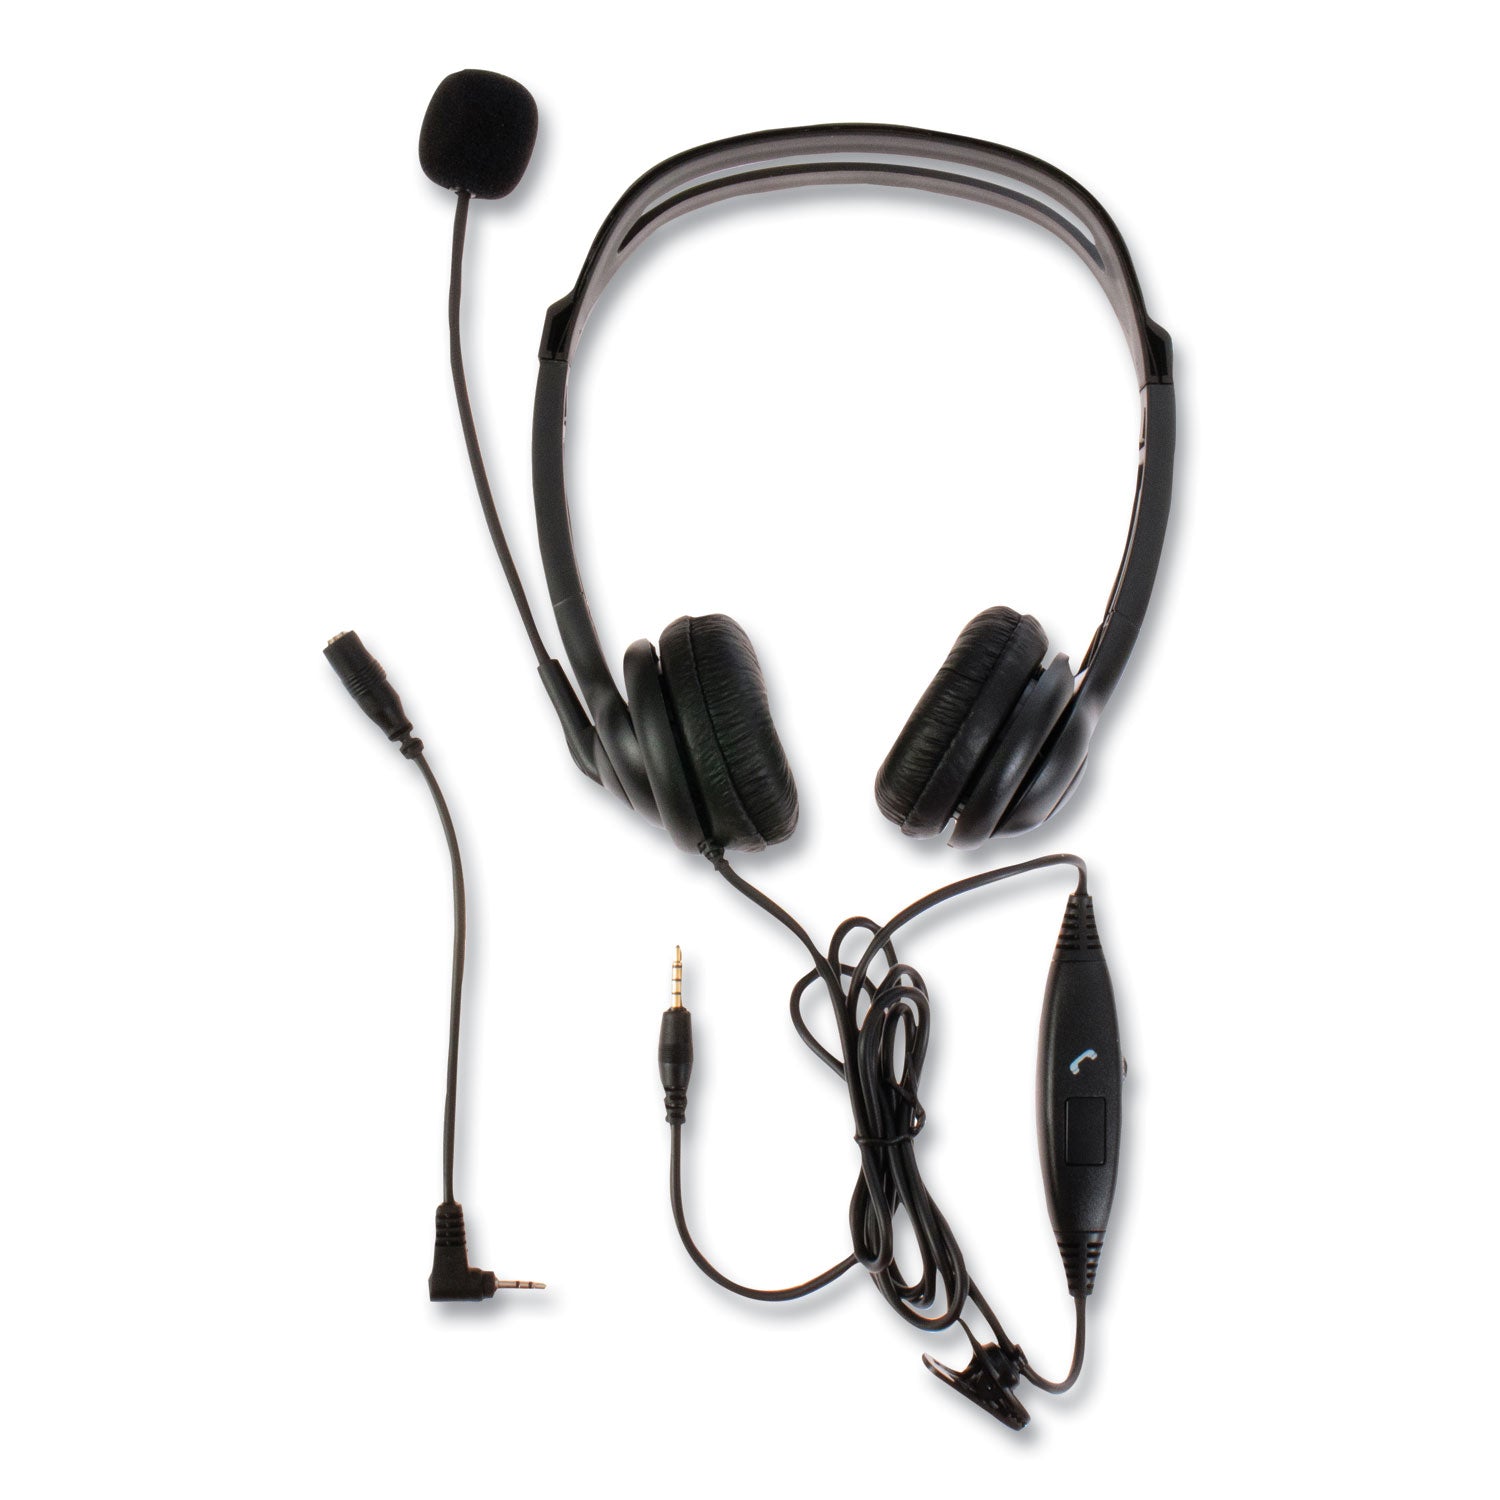 zum-zum350b-binaural-over-the-head-headset-black_sptzum350b - 1